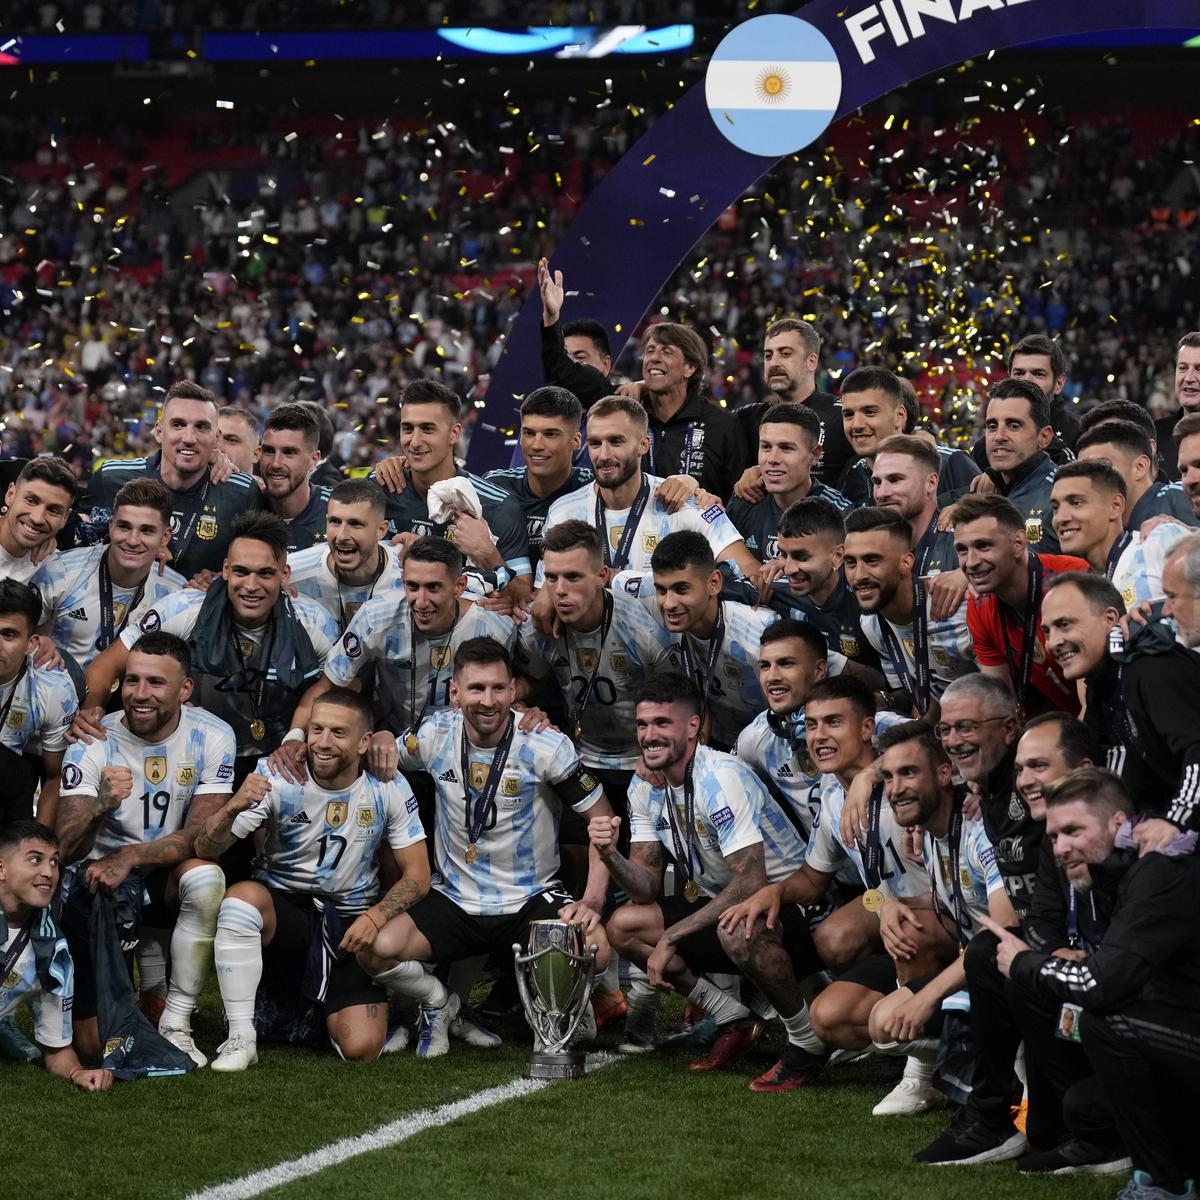 Lionel Messi, Julián Álvarez rumored to start for Argentina vs. Estonia